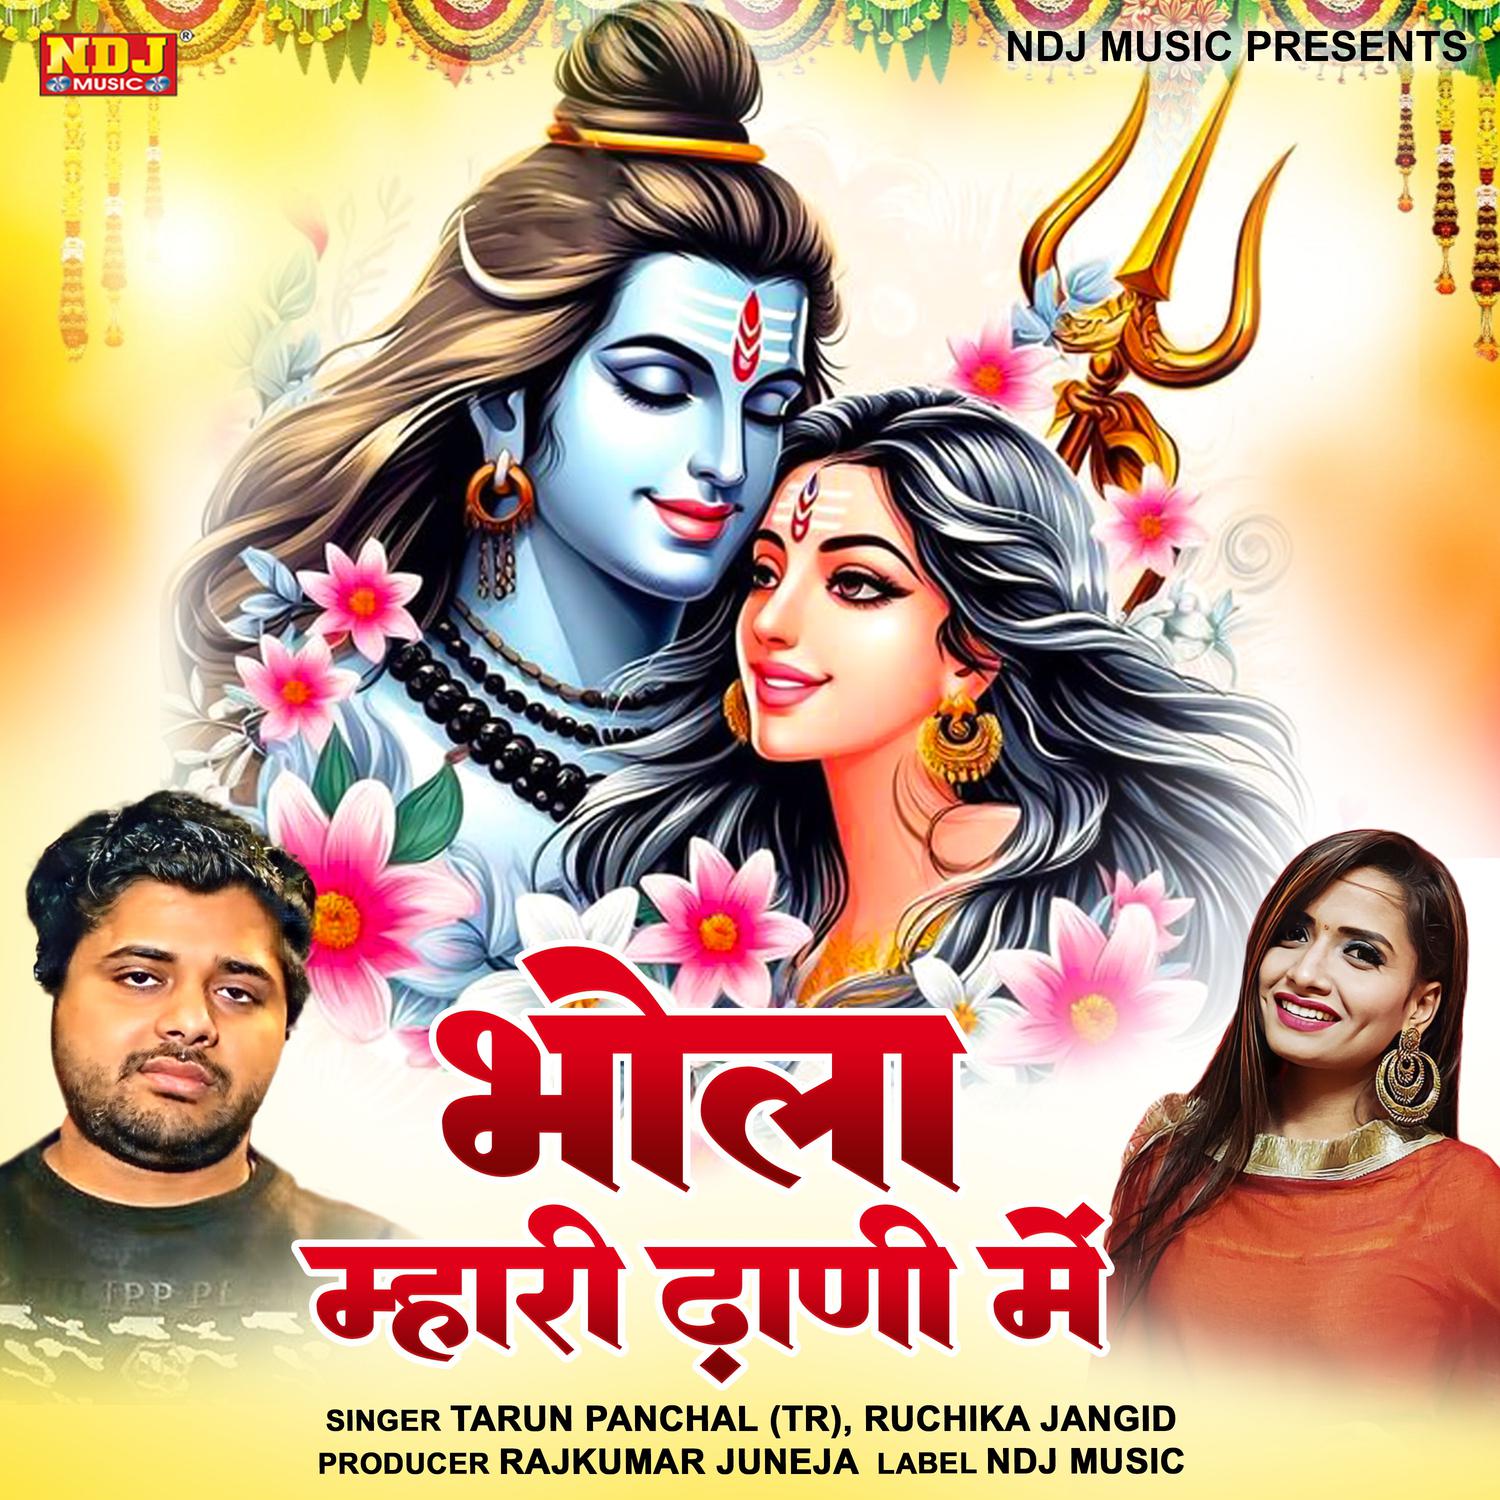 Trun Panchal (TR) - Bhola Mhari Dhani Me